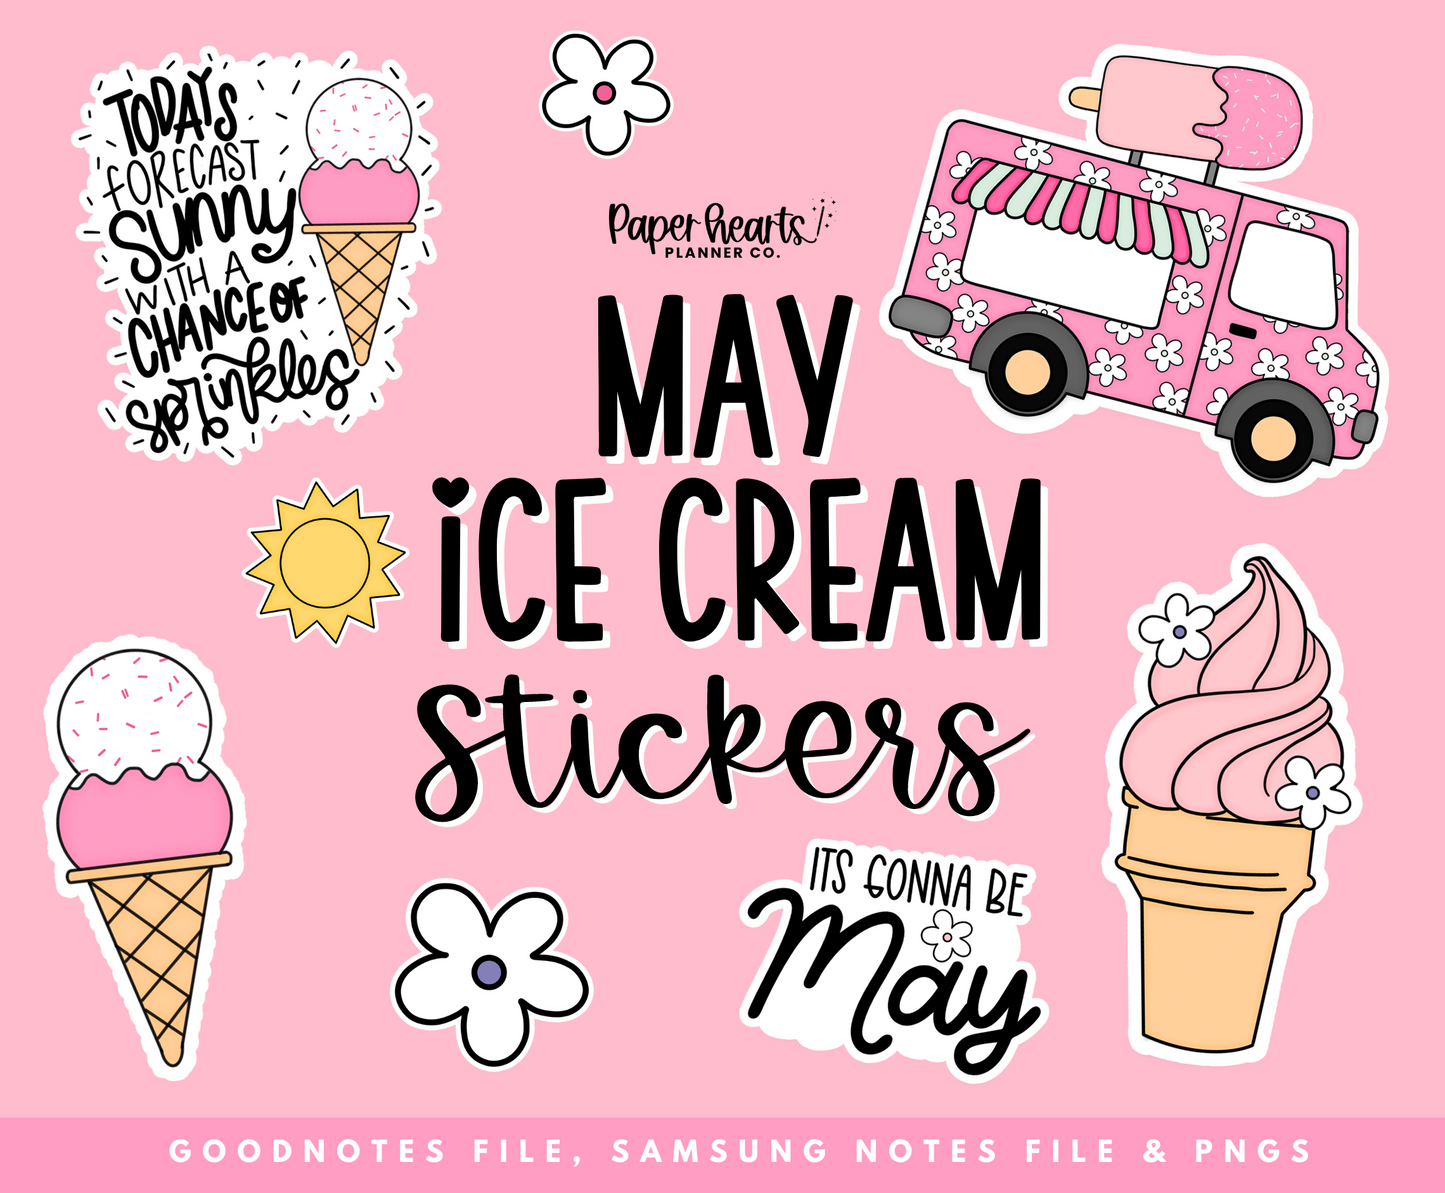 May Ice Cream Stickers